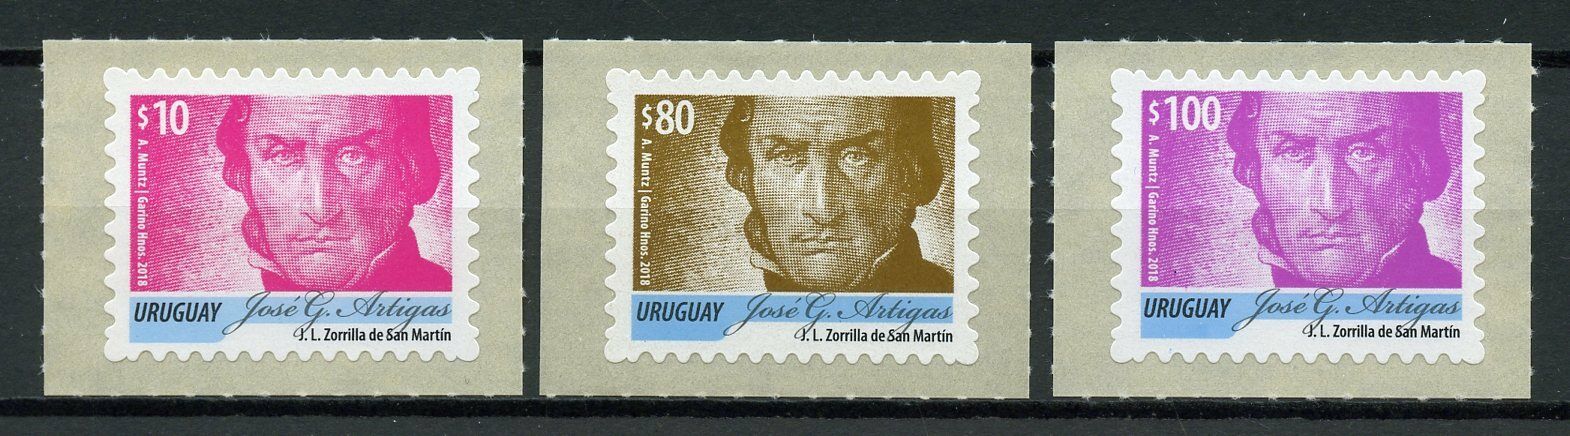 Uruguay 2018 MNH Jose Artigas Definitives Pt II 3v S/A Set Famous People Stamps